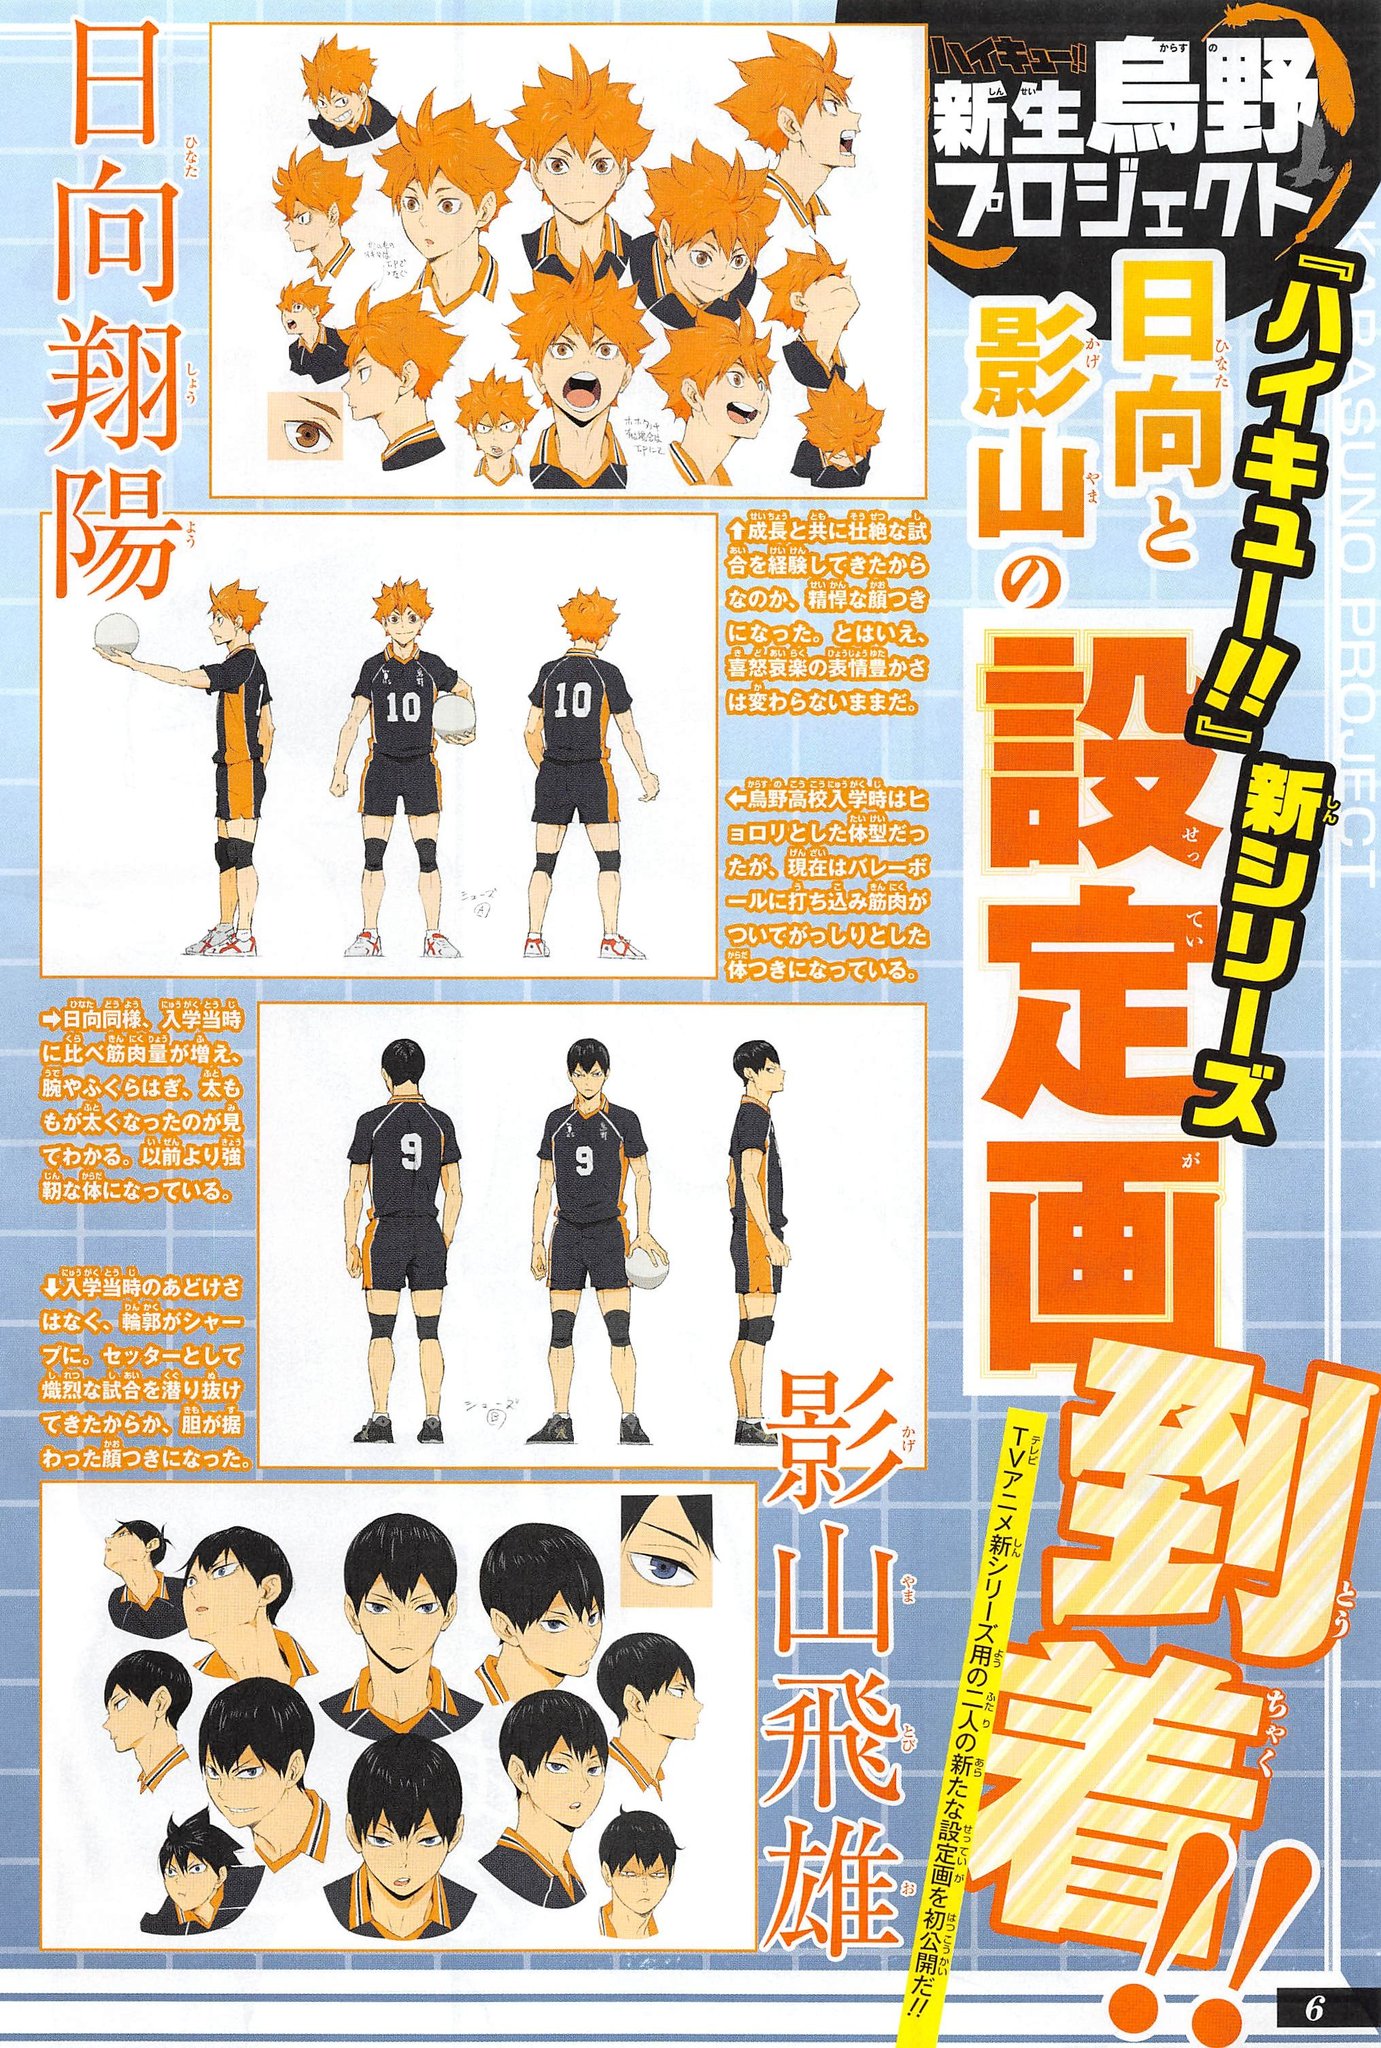 Anime News And Facts on X: Haikyuu Season 4 Character Design